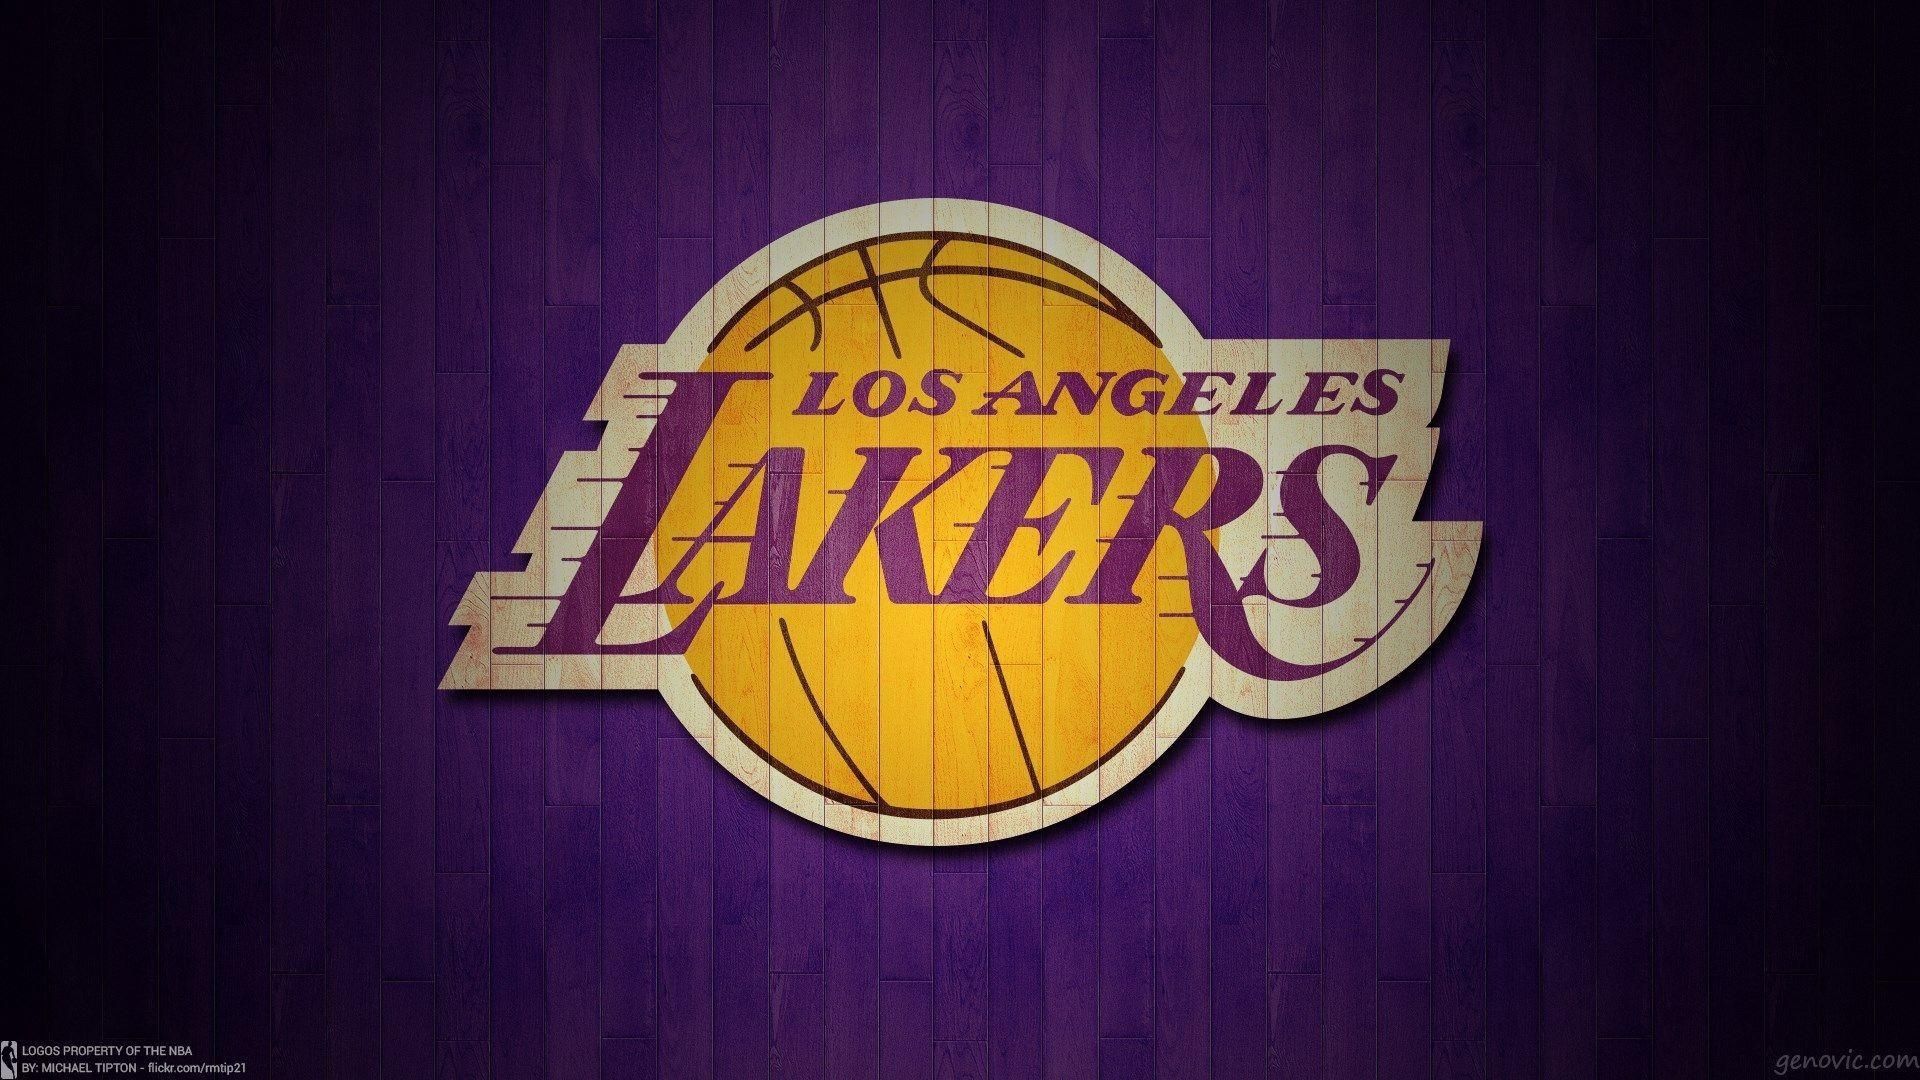 Latest Los Angeles Lakers Wallpaper HD FULL HD 1080p For PC Background. Lakers wallpaper, Nba wallpaper, Los angeles lakers